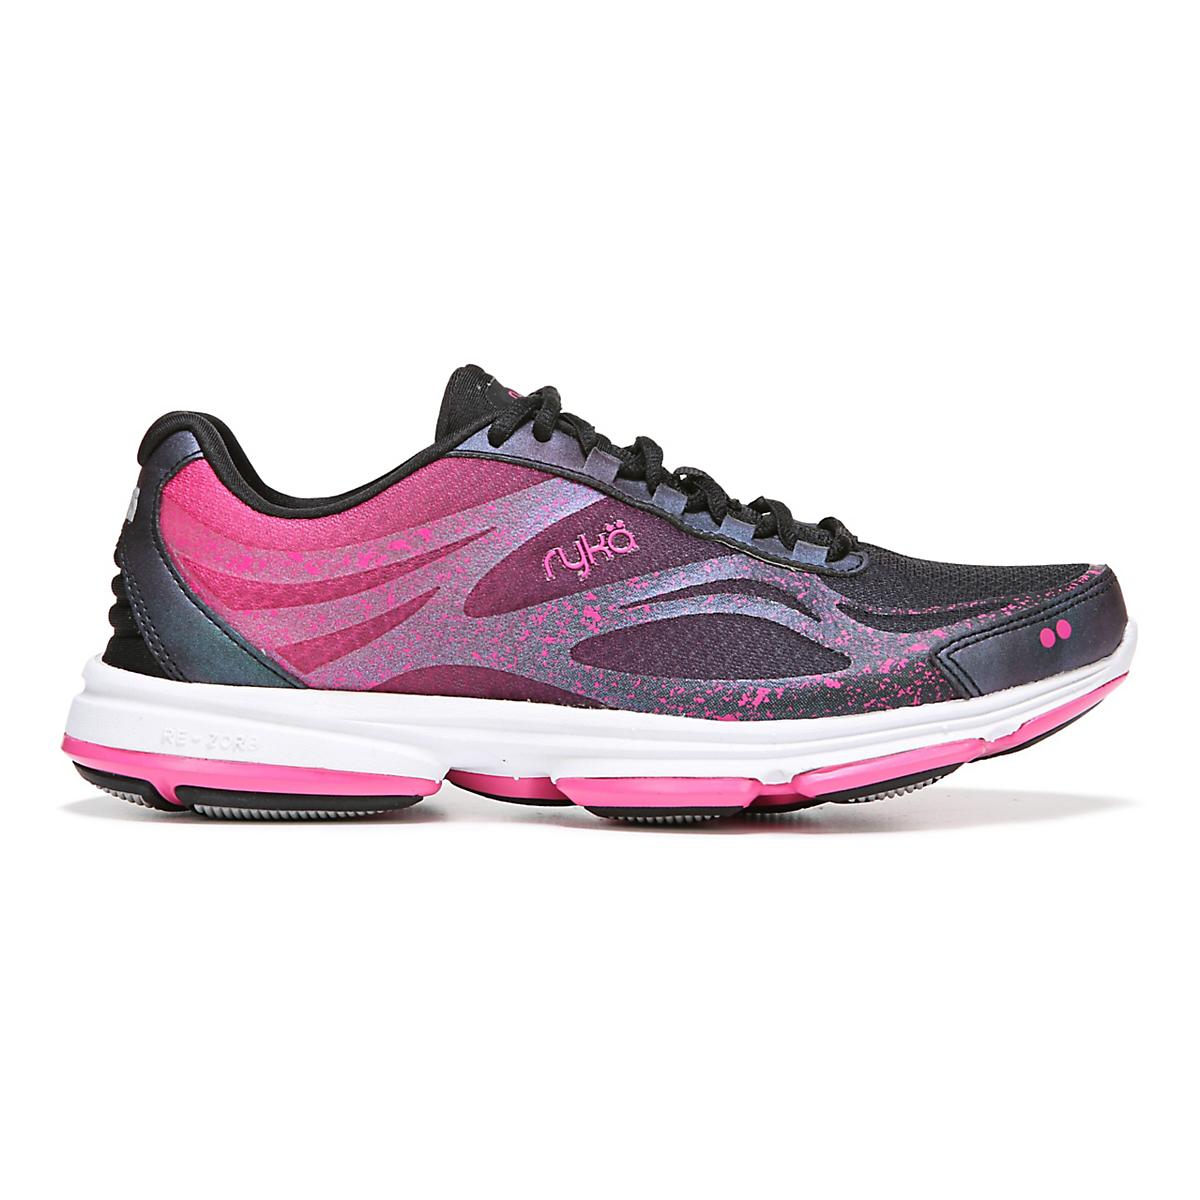 Ryka Devotion 3 . +80 Most Inspiring Workout Shoes Ideas for Women - 34